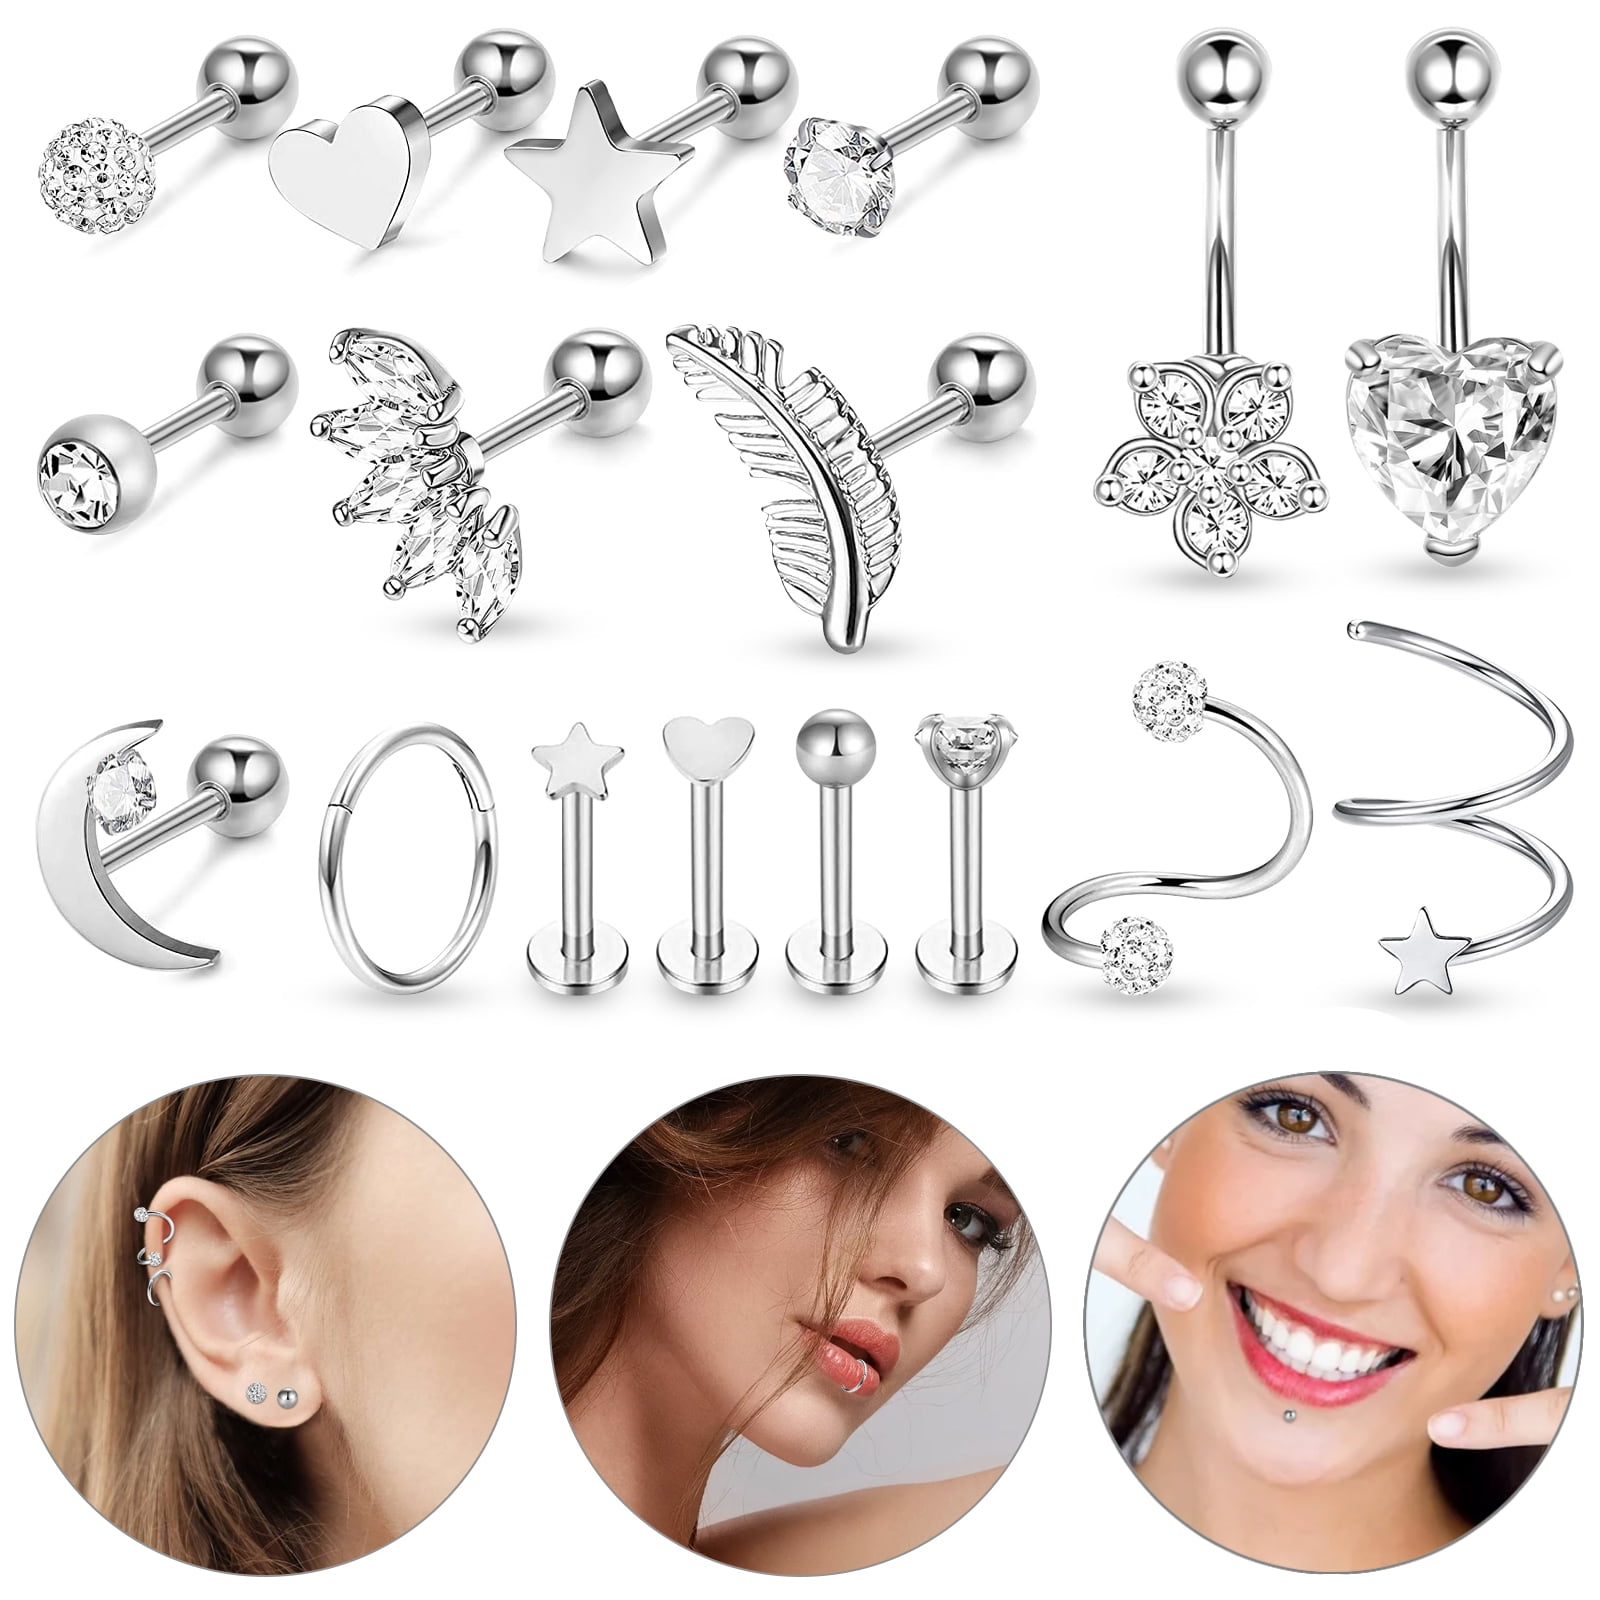 17pcs 16G Tragus Earrings, EEEkit Stainless Steel Cartilage Helix ...